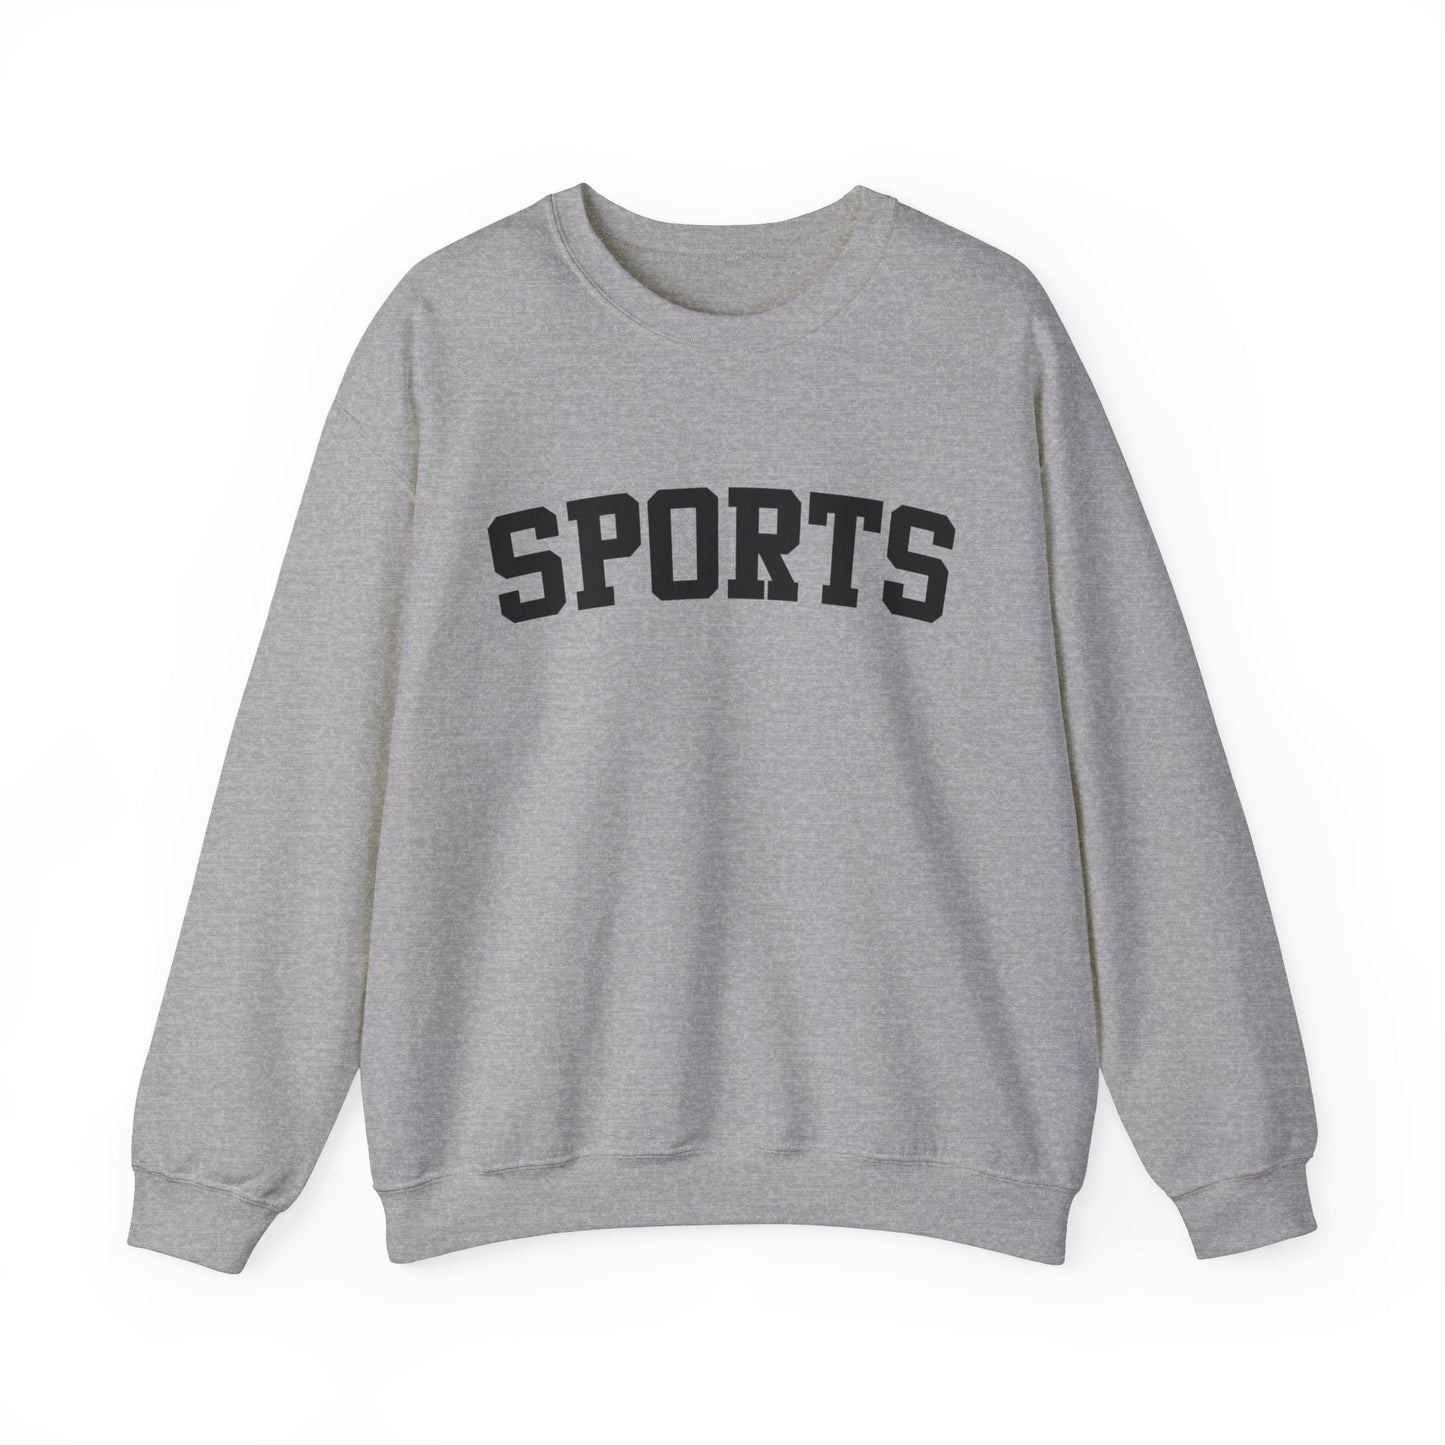 Sports - Unisex Crewneck Sweatshirt